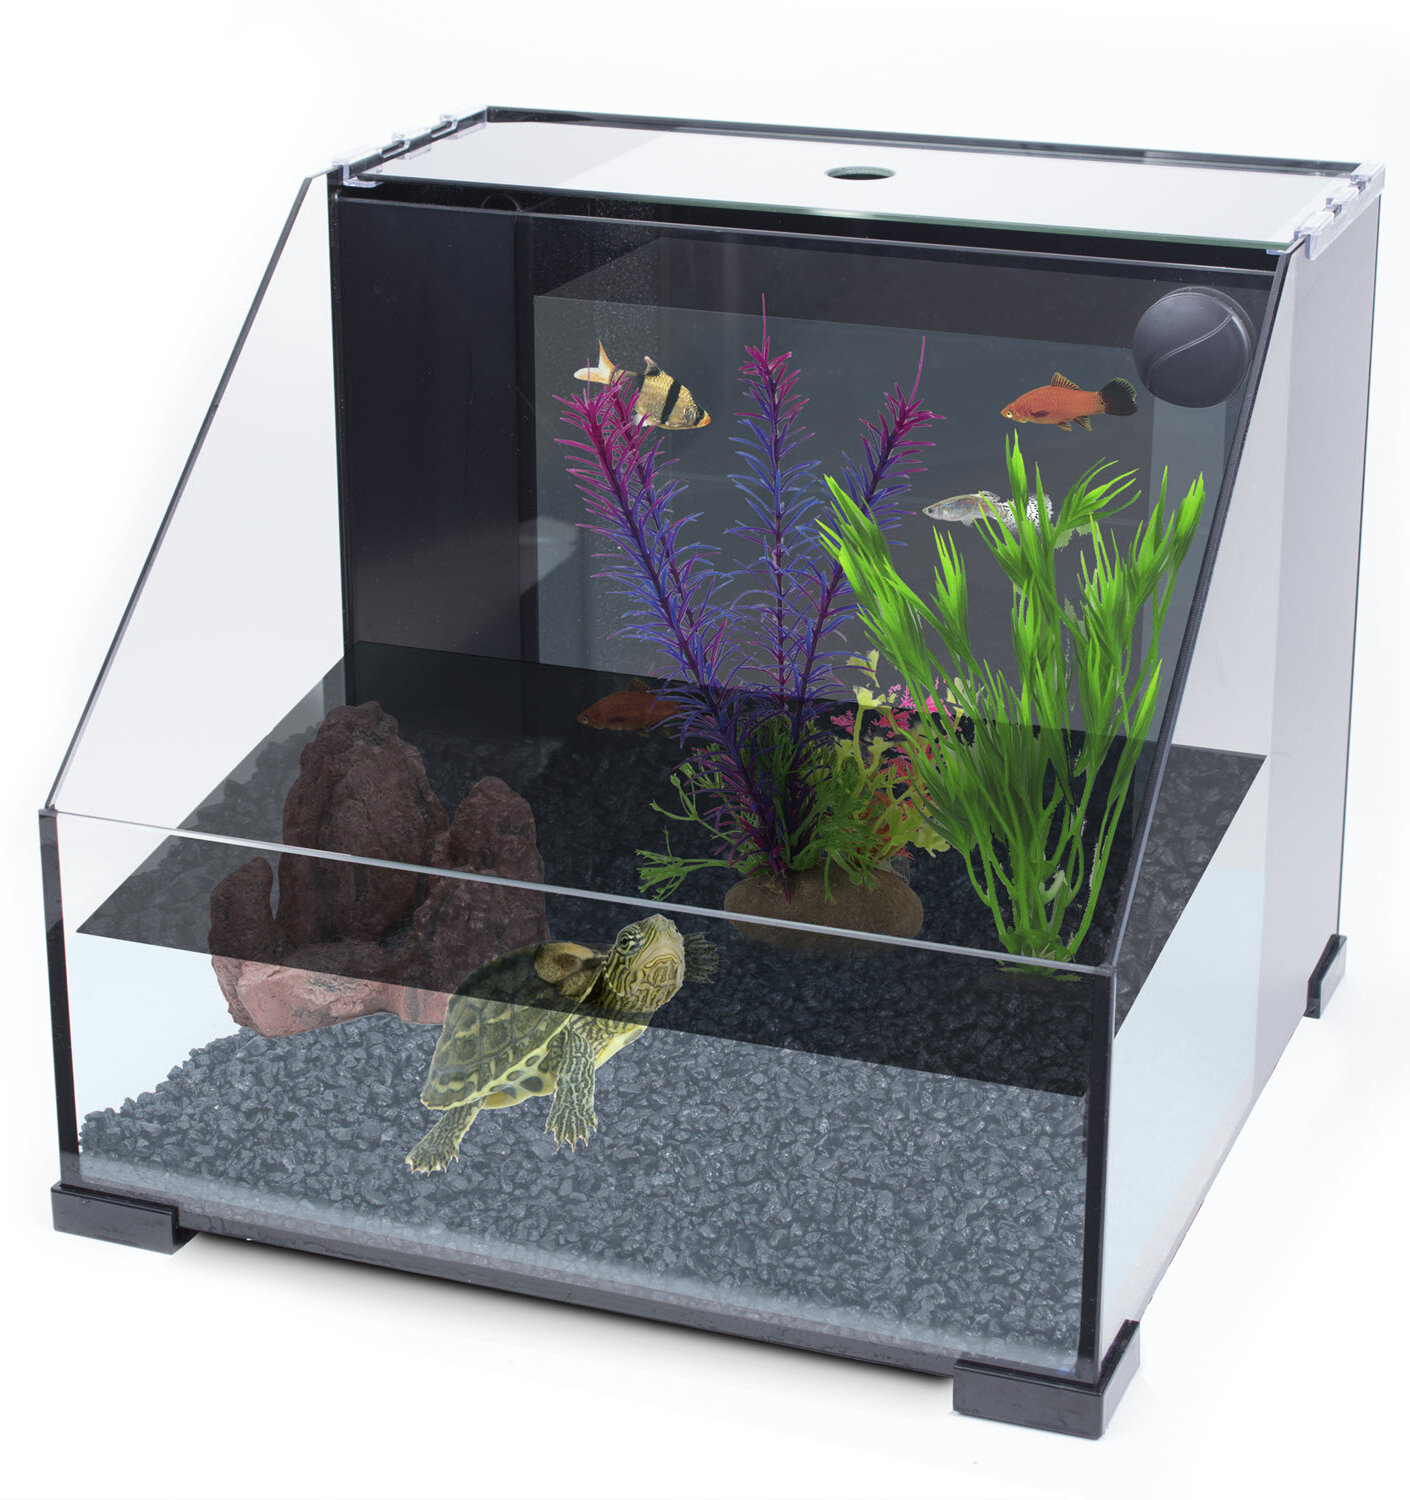 Aqua Aquarium Fish Tank Hang On External Waterfall Water Filter Shrimp Plastic